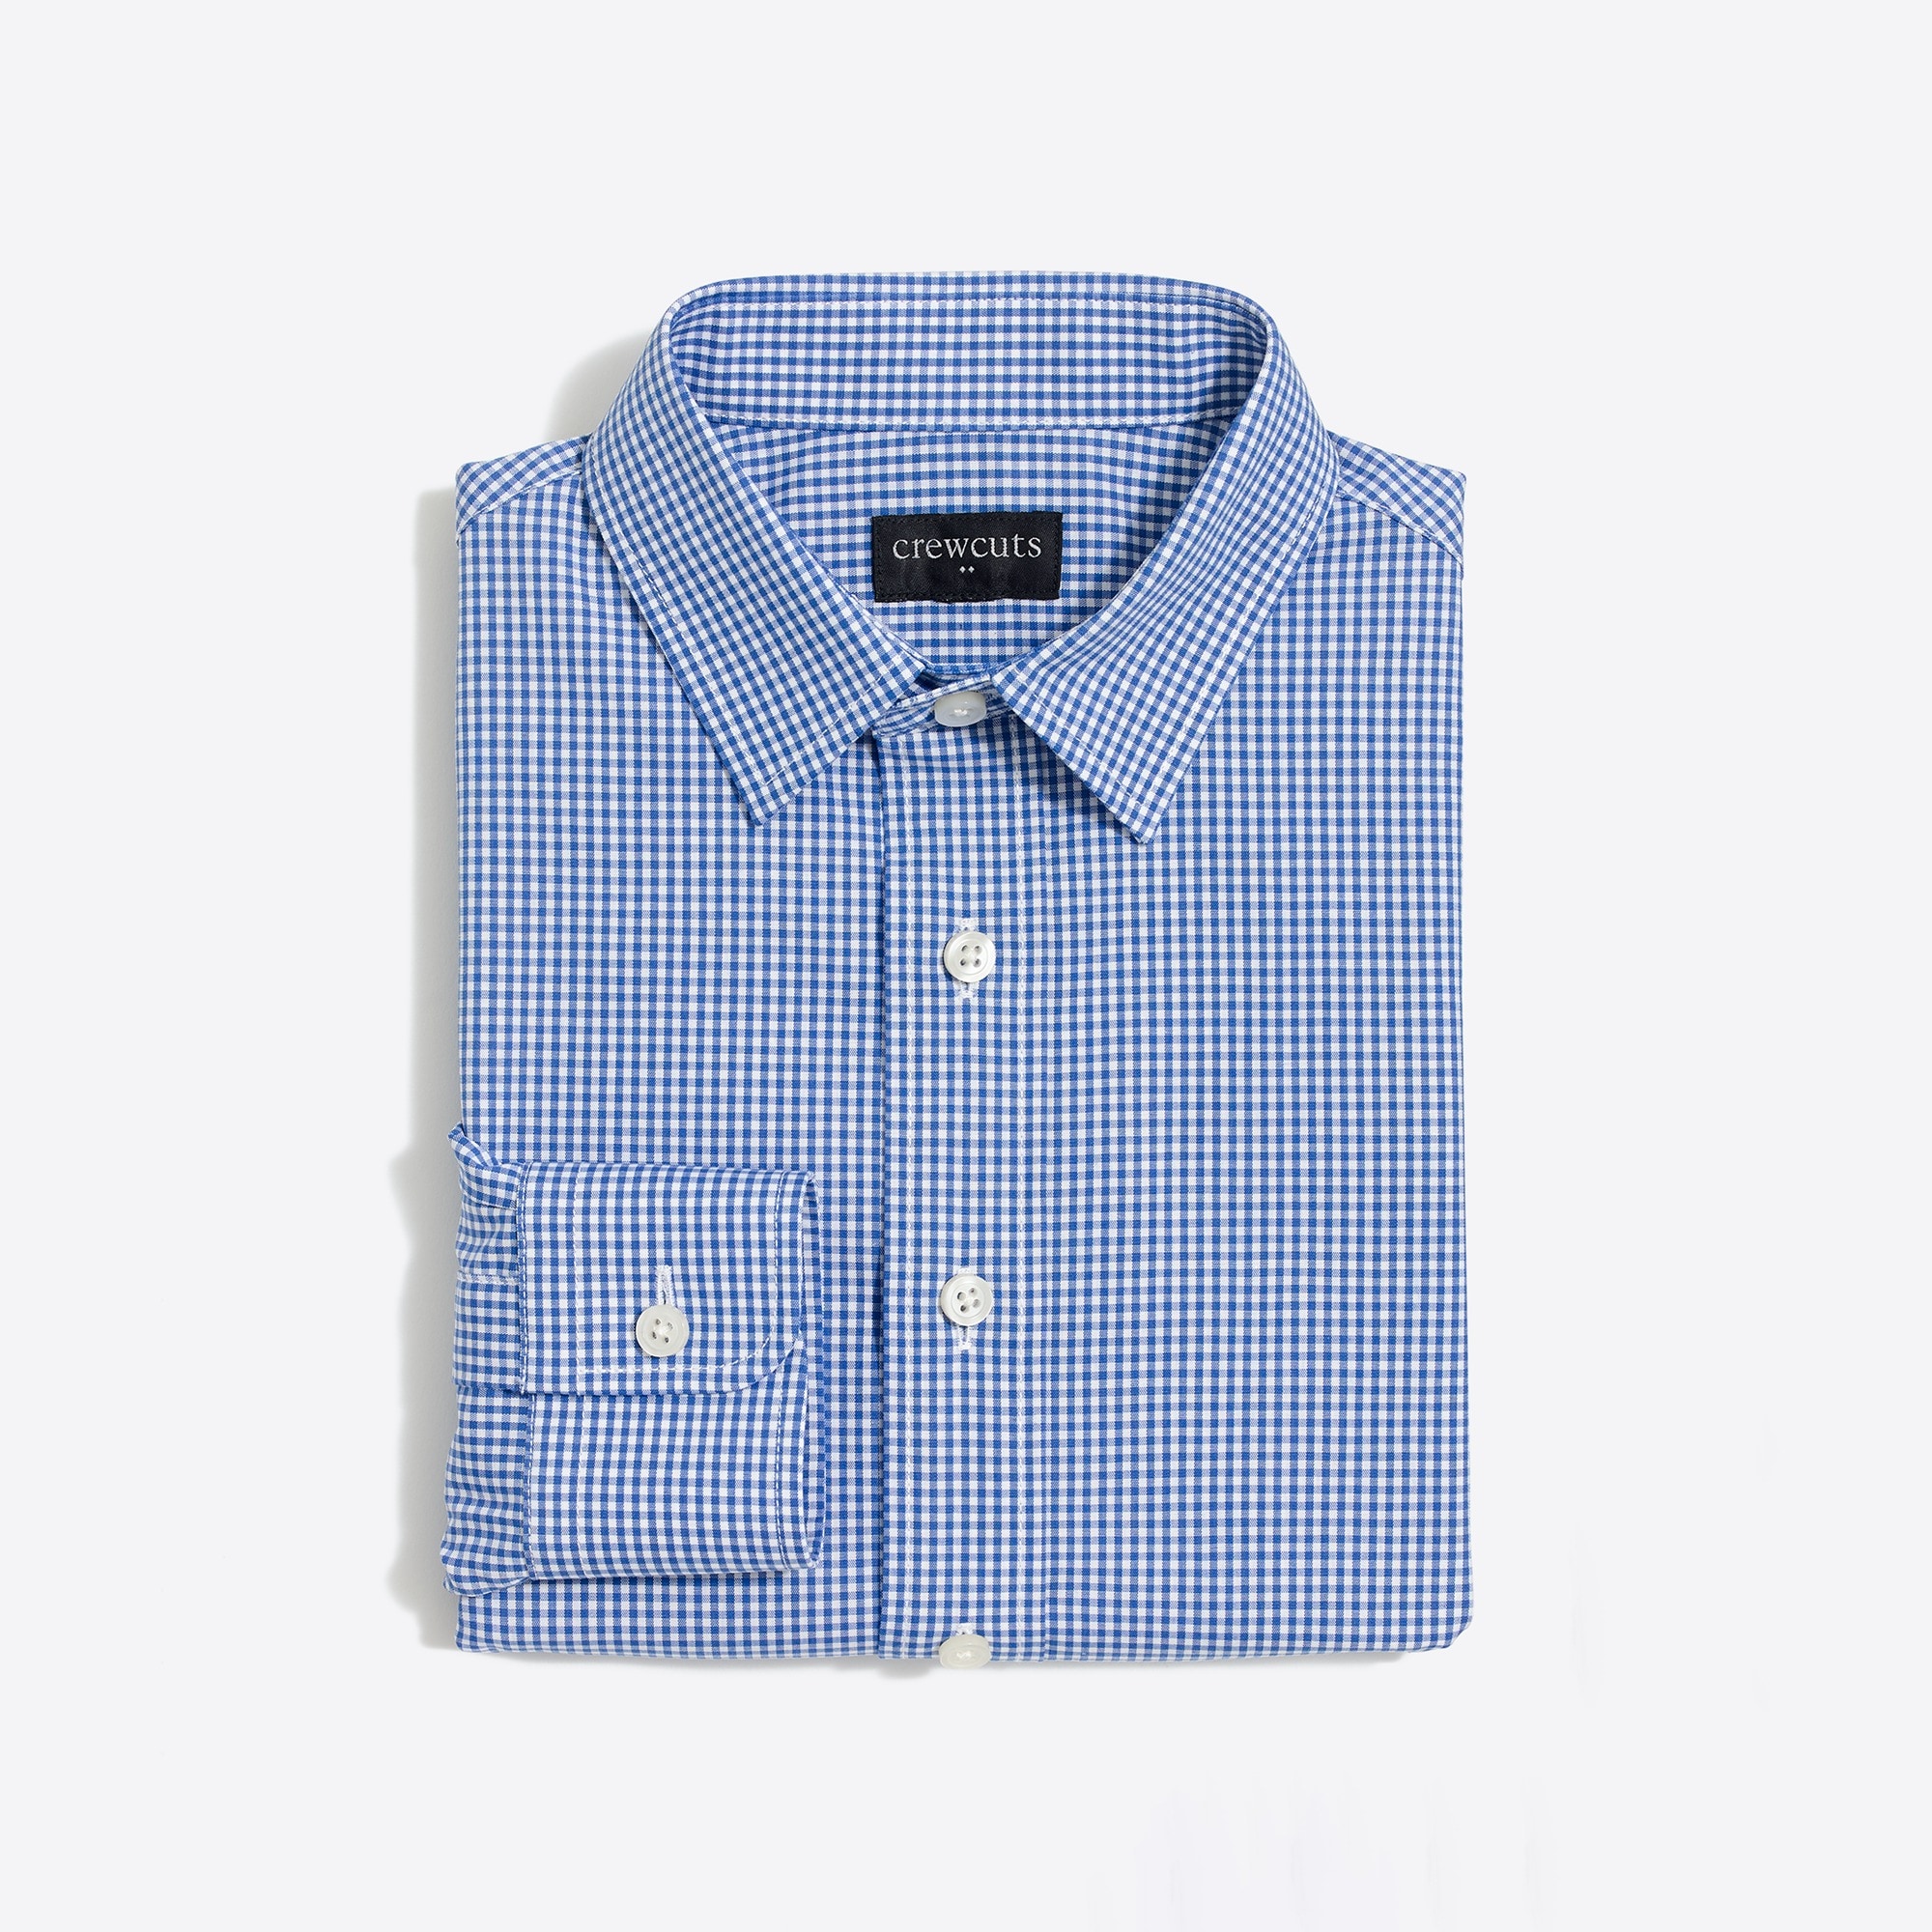 Boys' long-sleeve flex Thompson patterned shirt